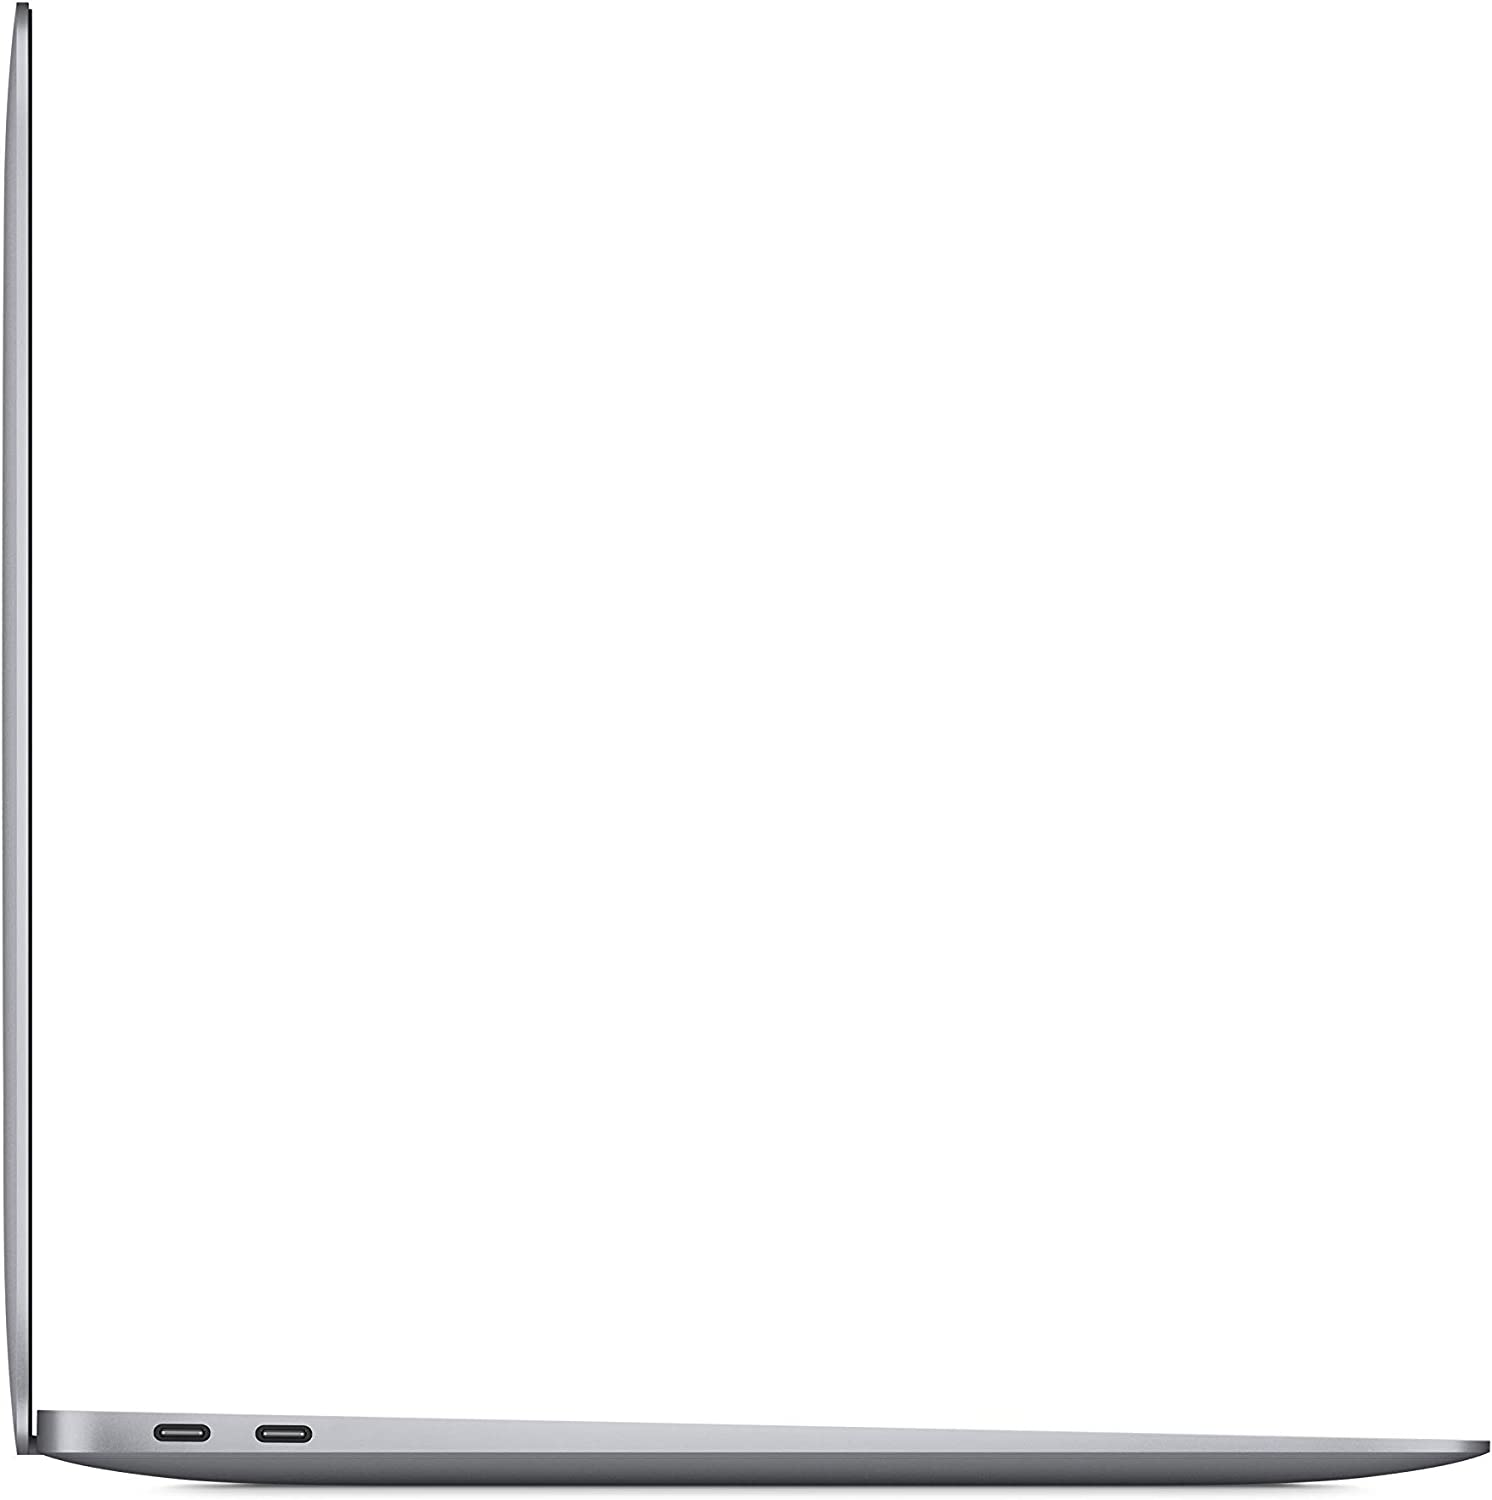 Apple MacBook Air with Apple (MGN63B/A) M1 Chip 2020 (13-inch, 8GB RAM, 256GB SSD Storage) - ENG/ARA KB, Space Gray